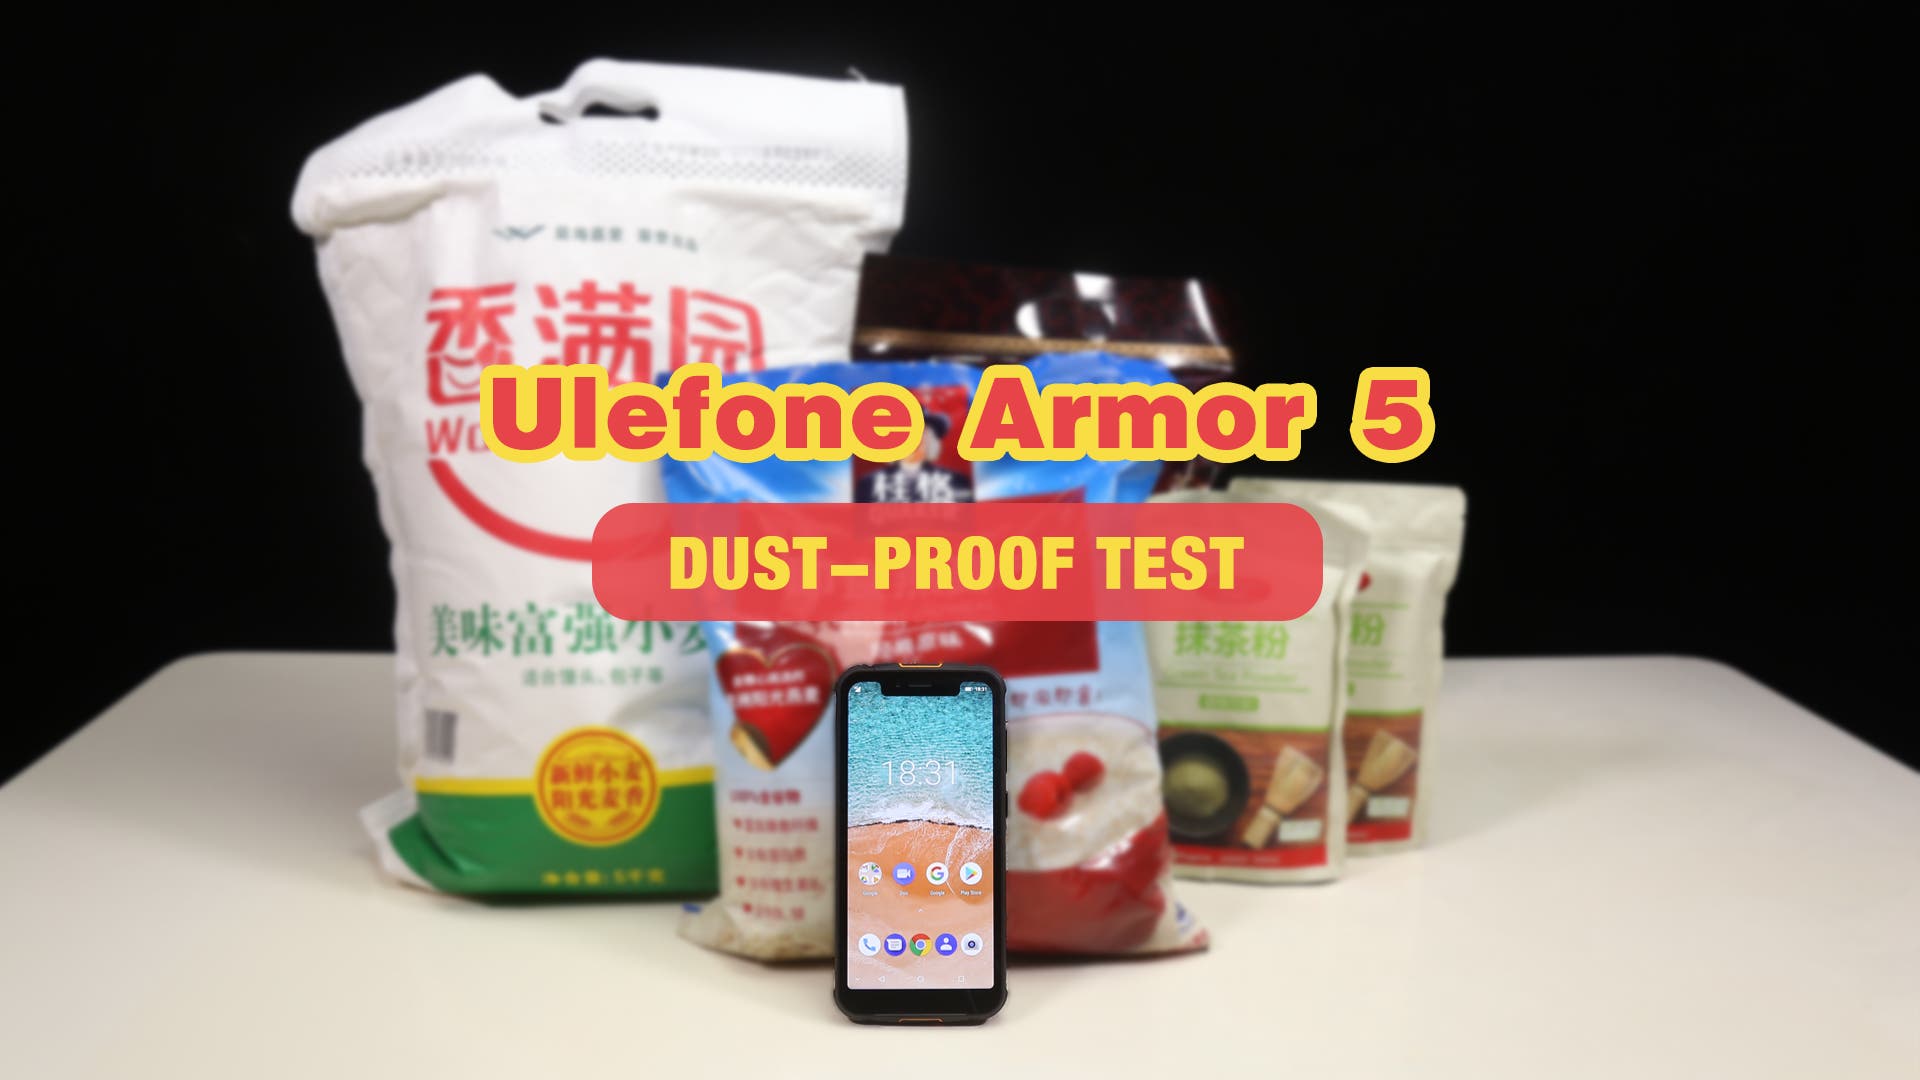 Ulefone Armor 5